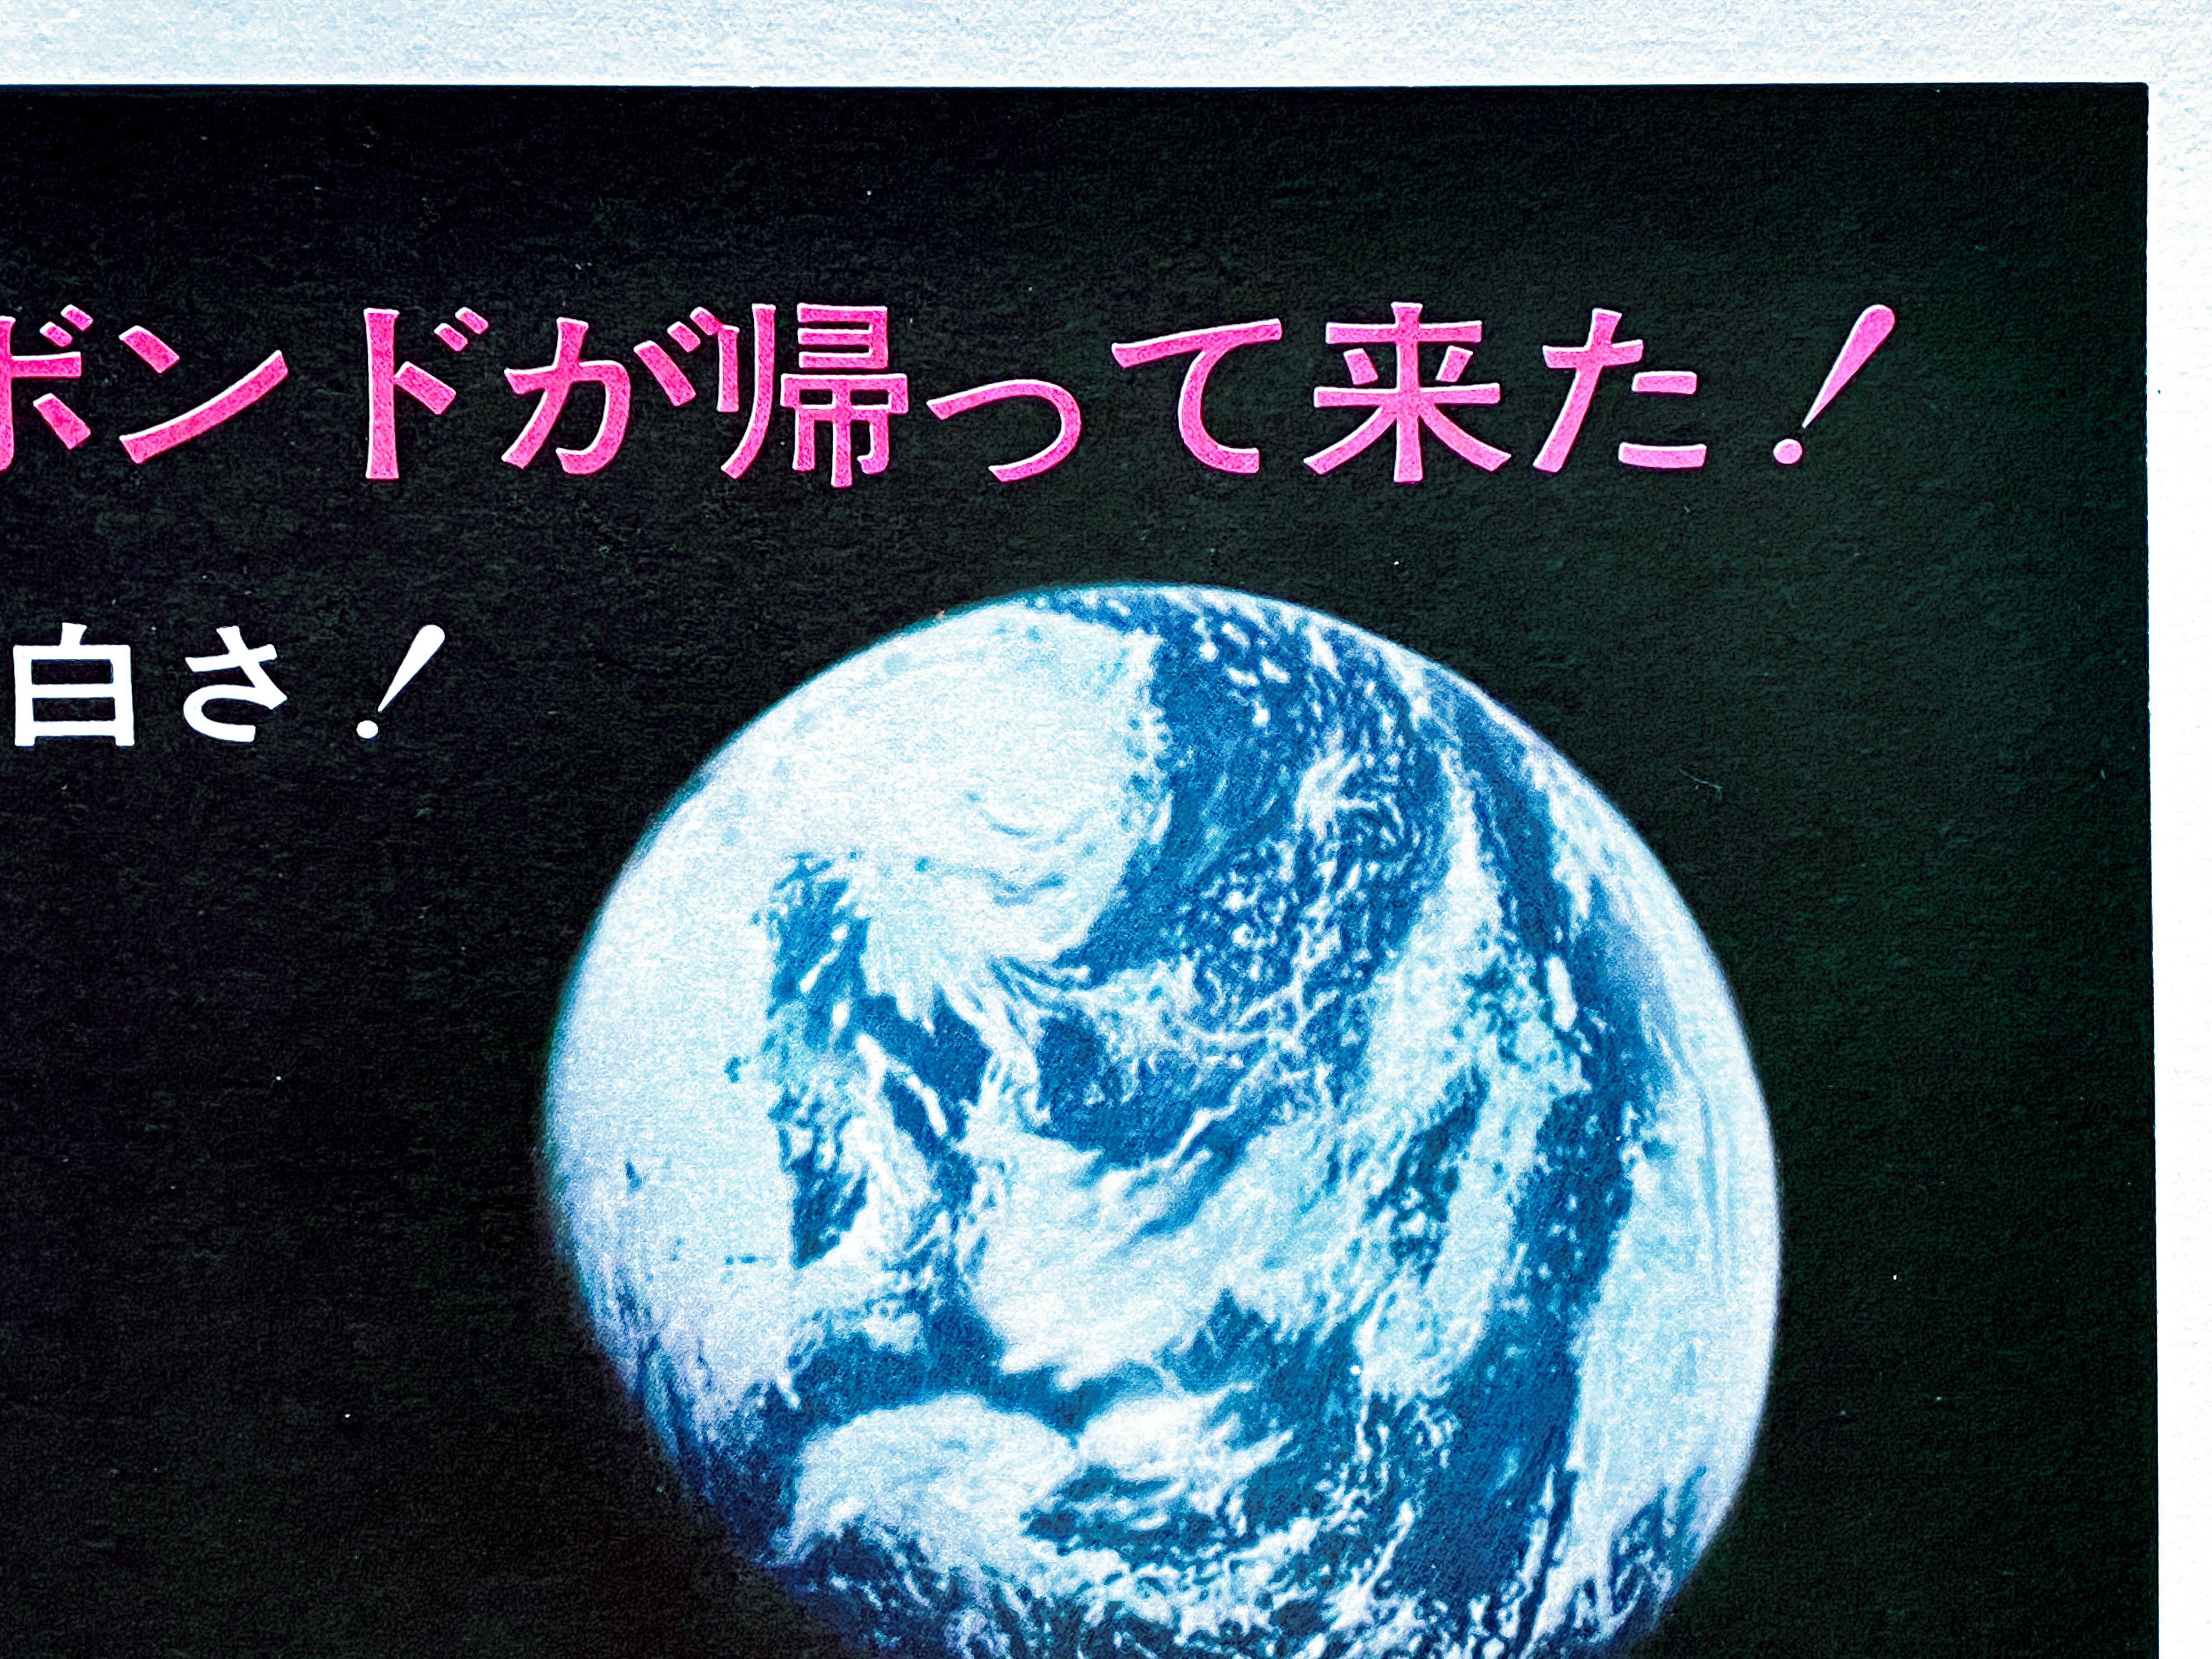 James Bond 'Diamonds Are Forever' Original Vintage Japanese Movie Poster, 1971 For Sale 5